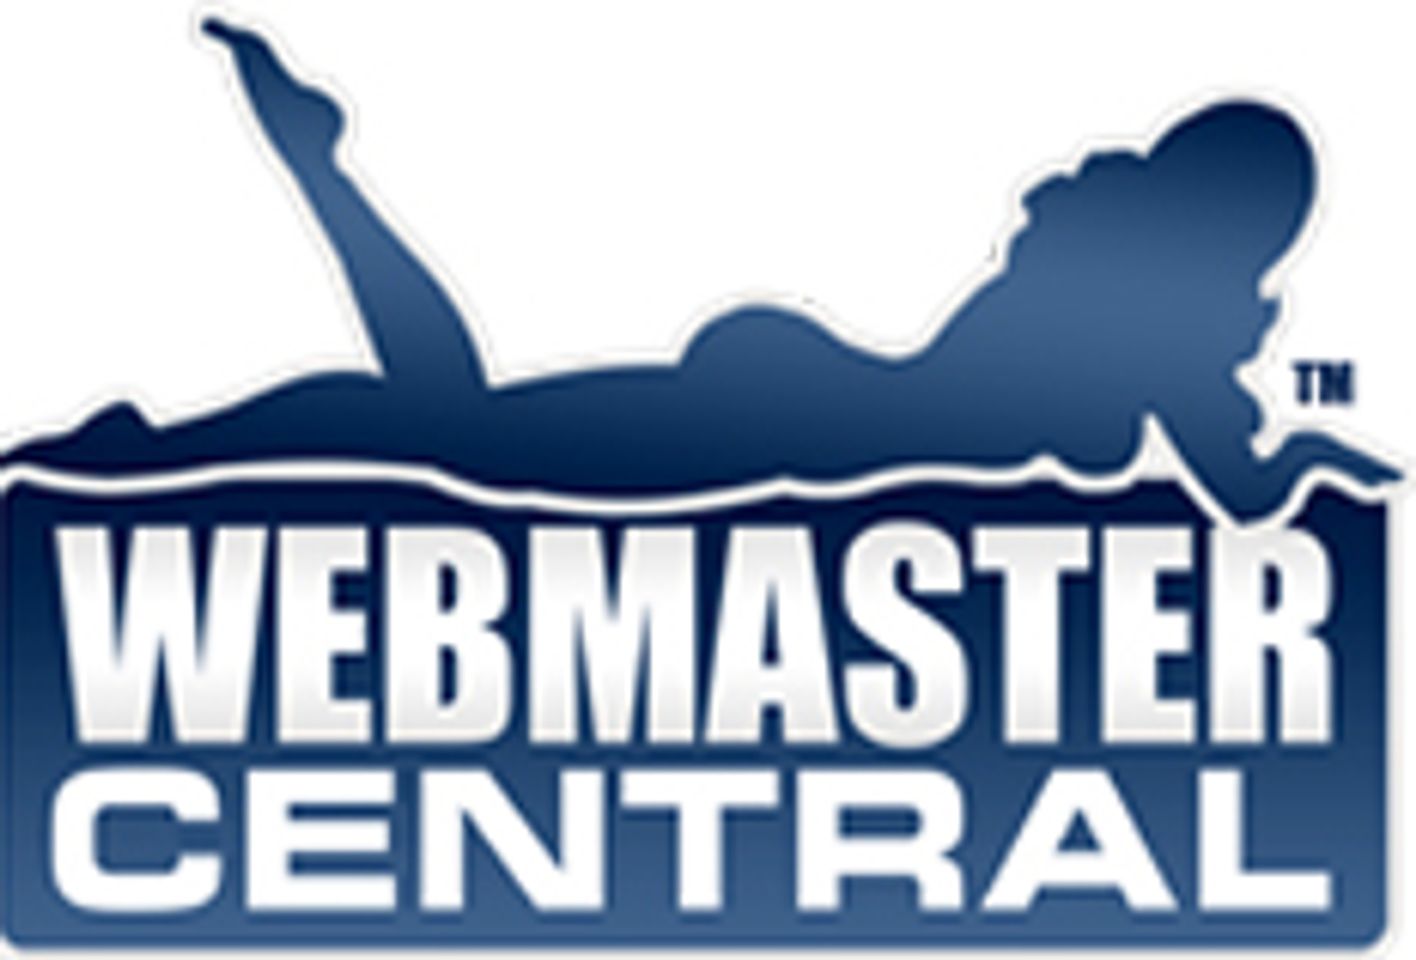 Webmaster Central Offers Free Consultations to Master Google Chromecast